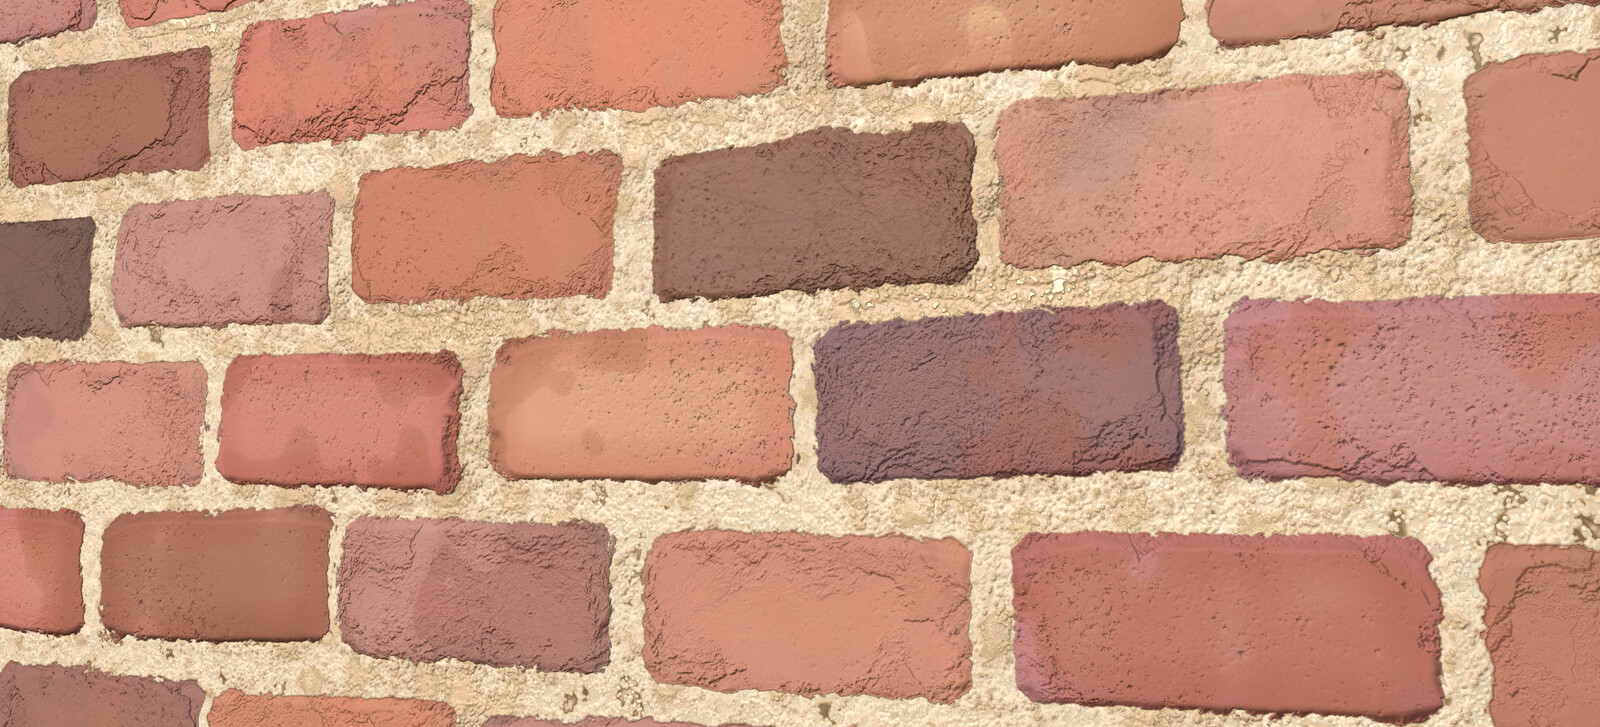 Close up 2 of bricks 